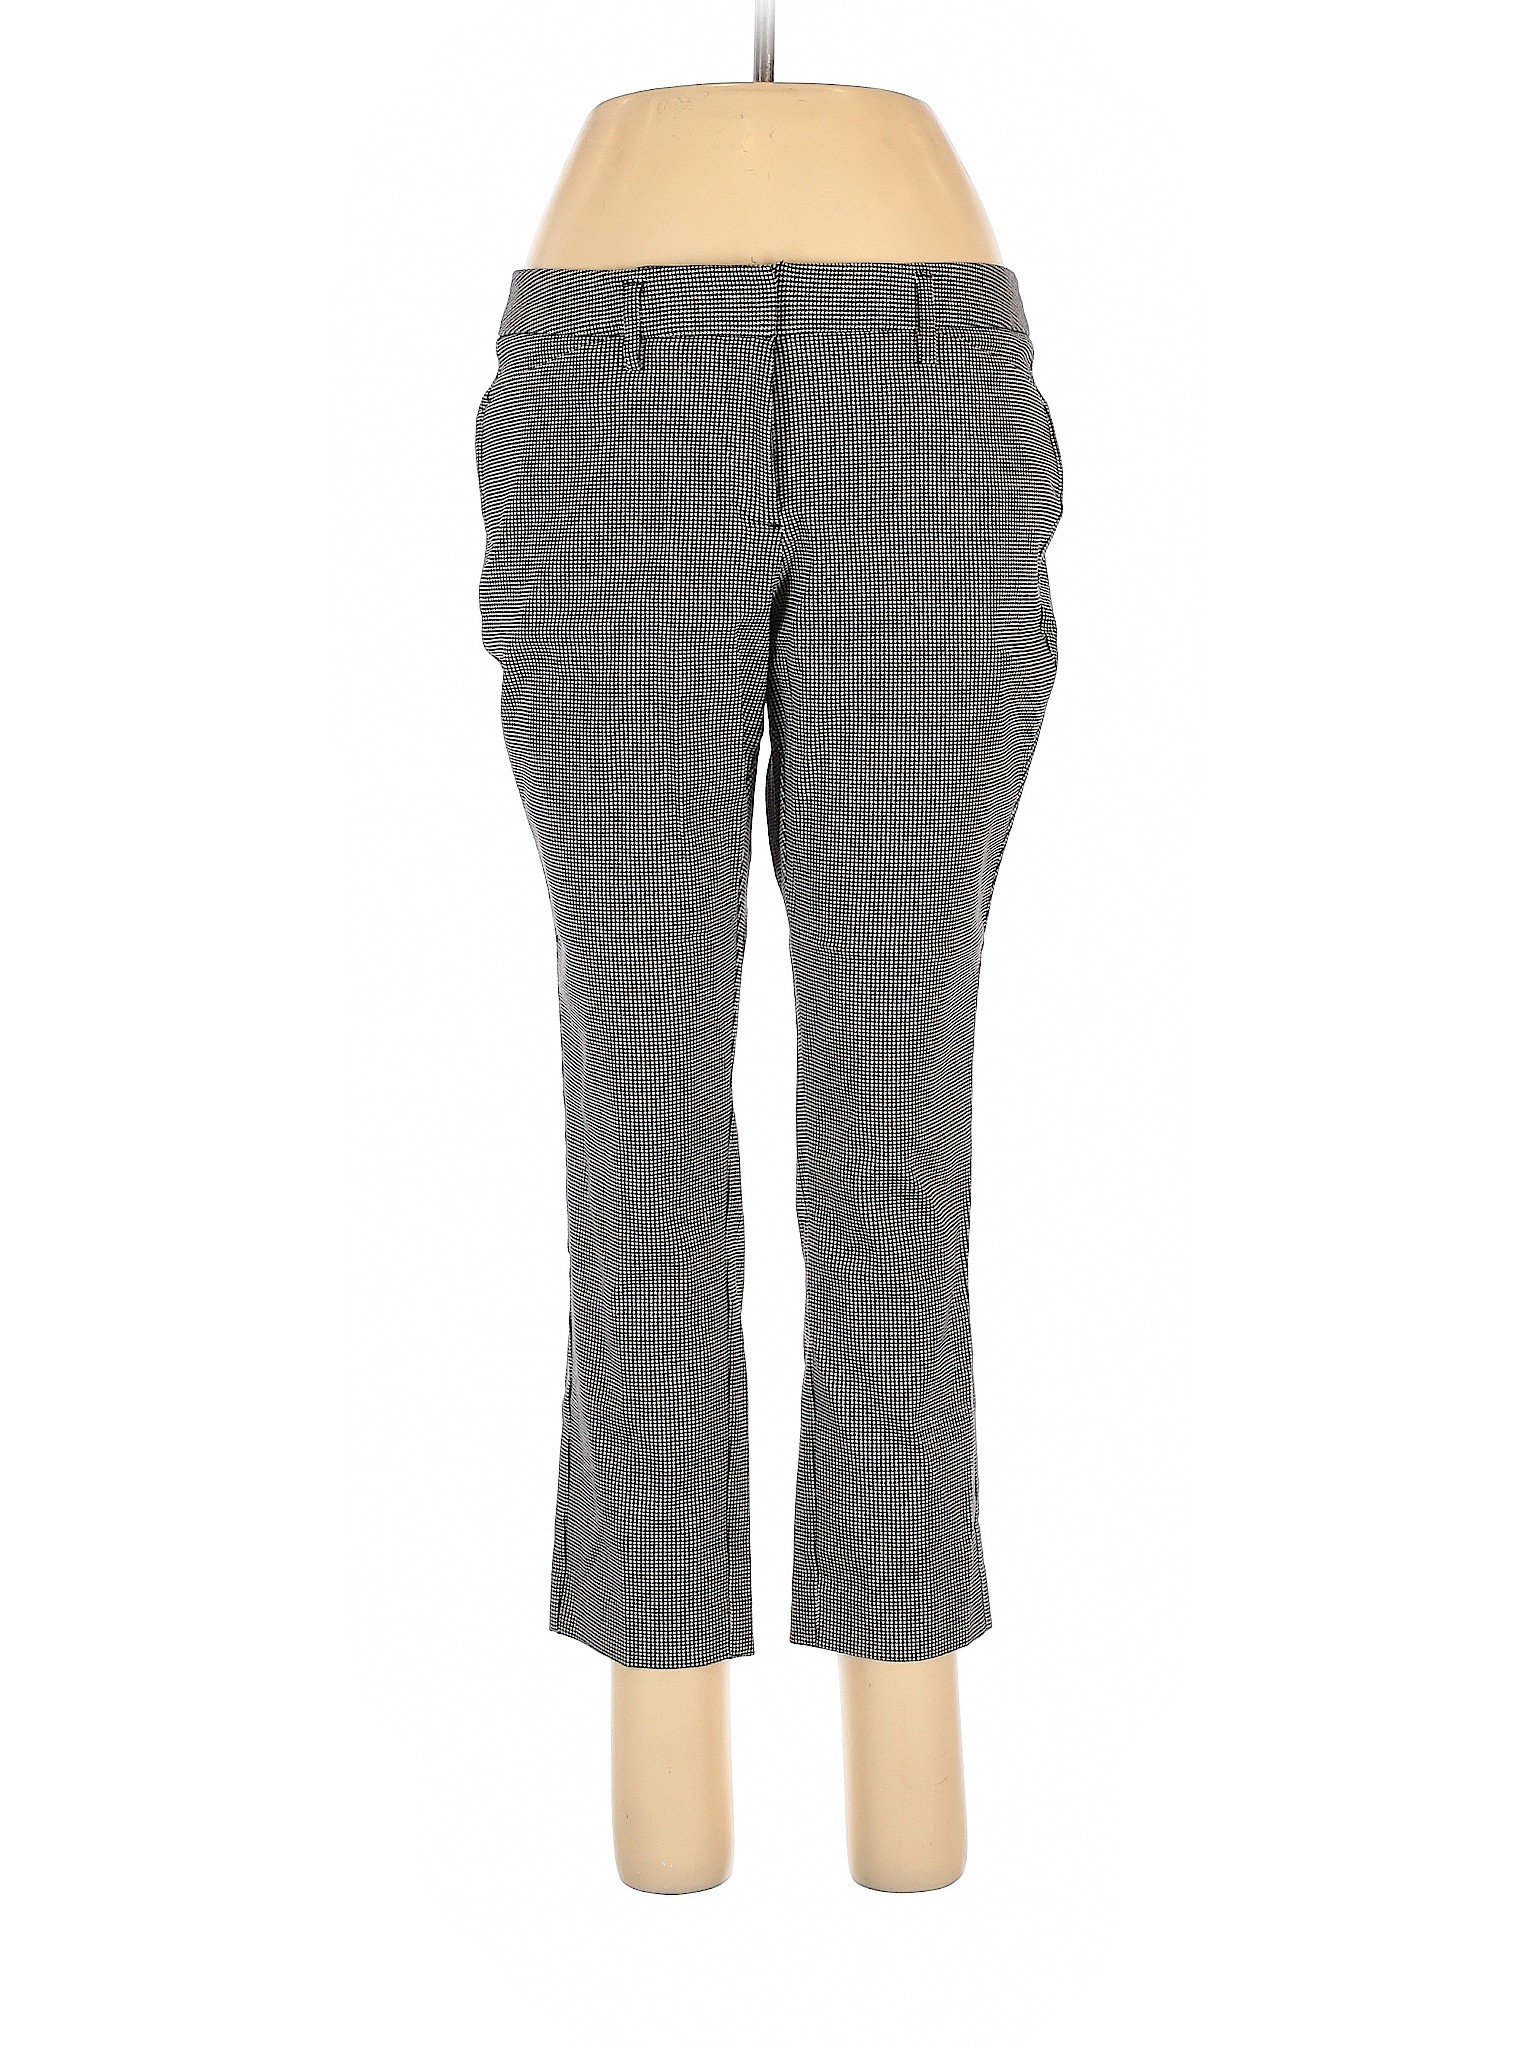 Worthington Women Gray Dress Pants 10 Petites | eBay